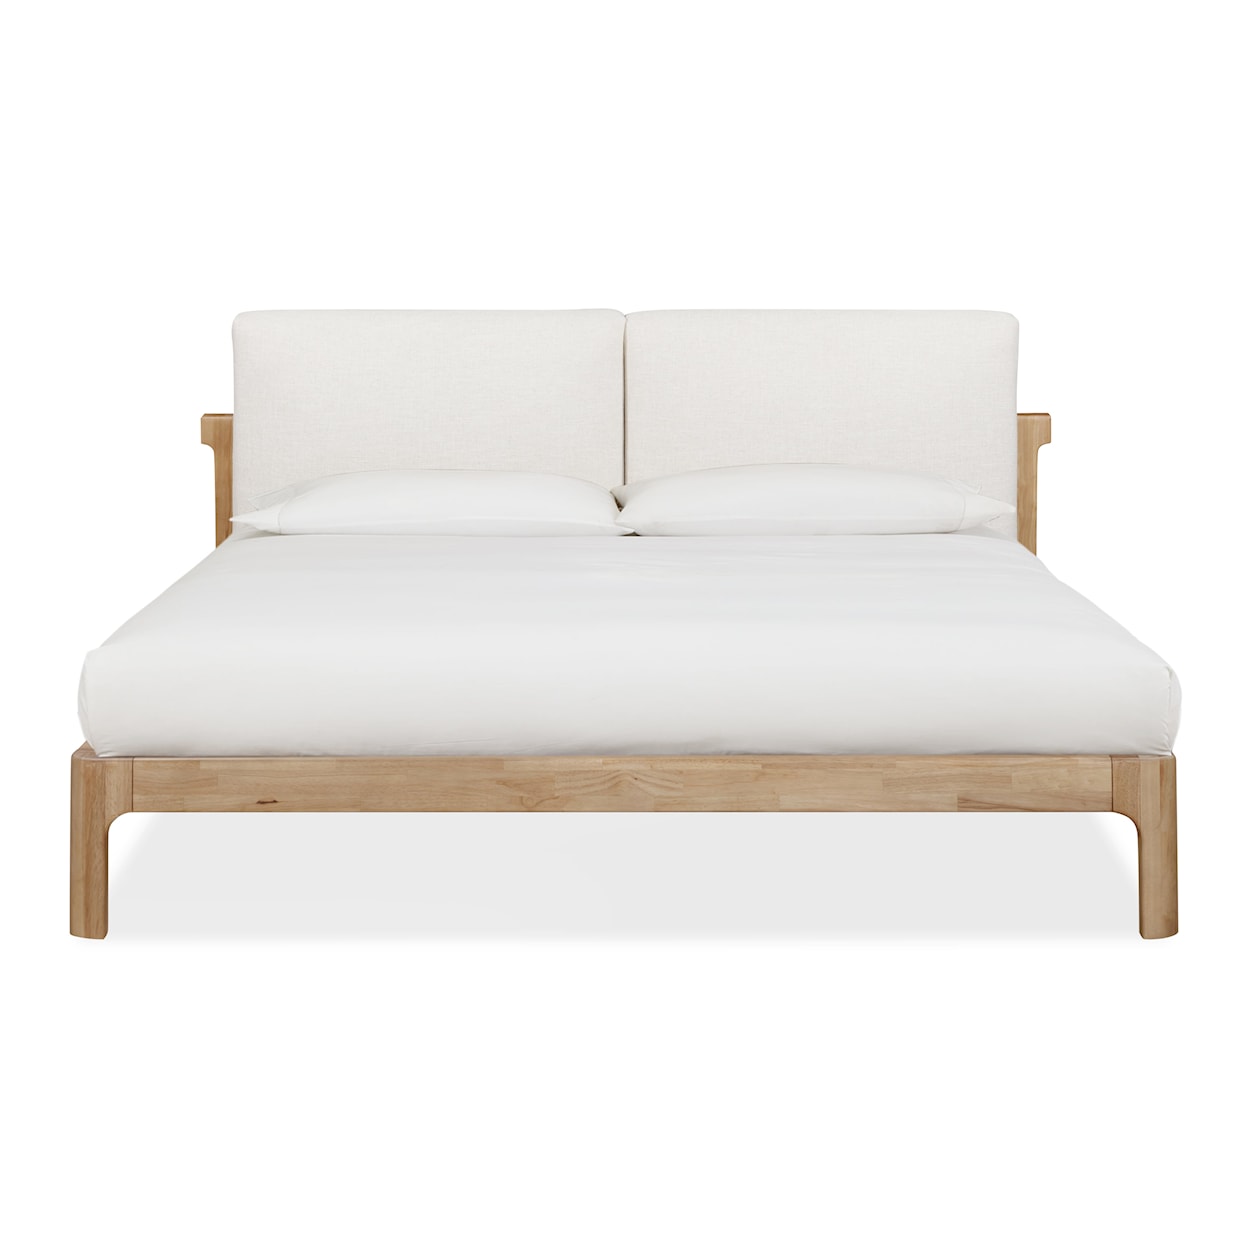 Modus International Furano 6-Piece Full Bedroom Set